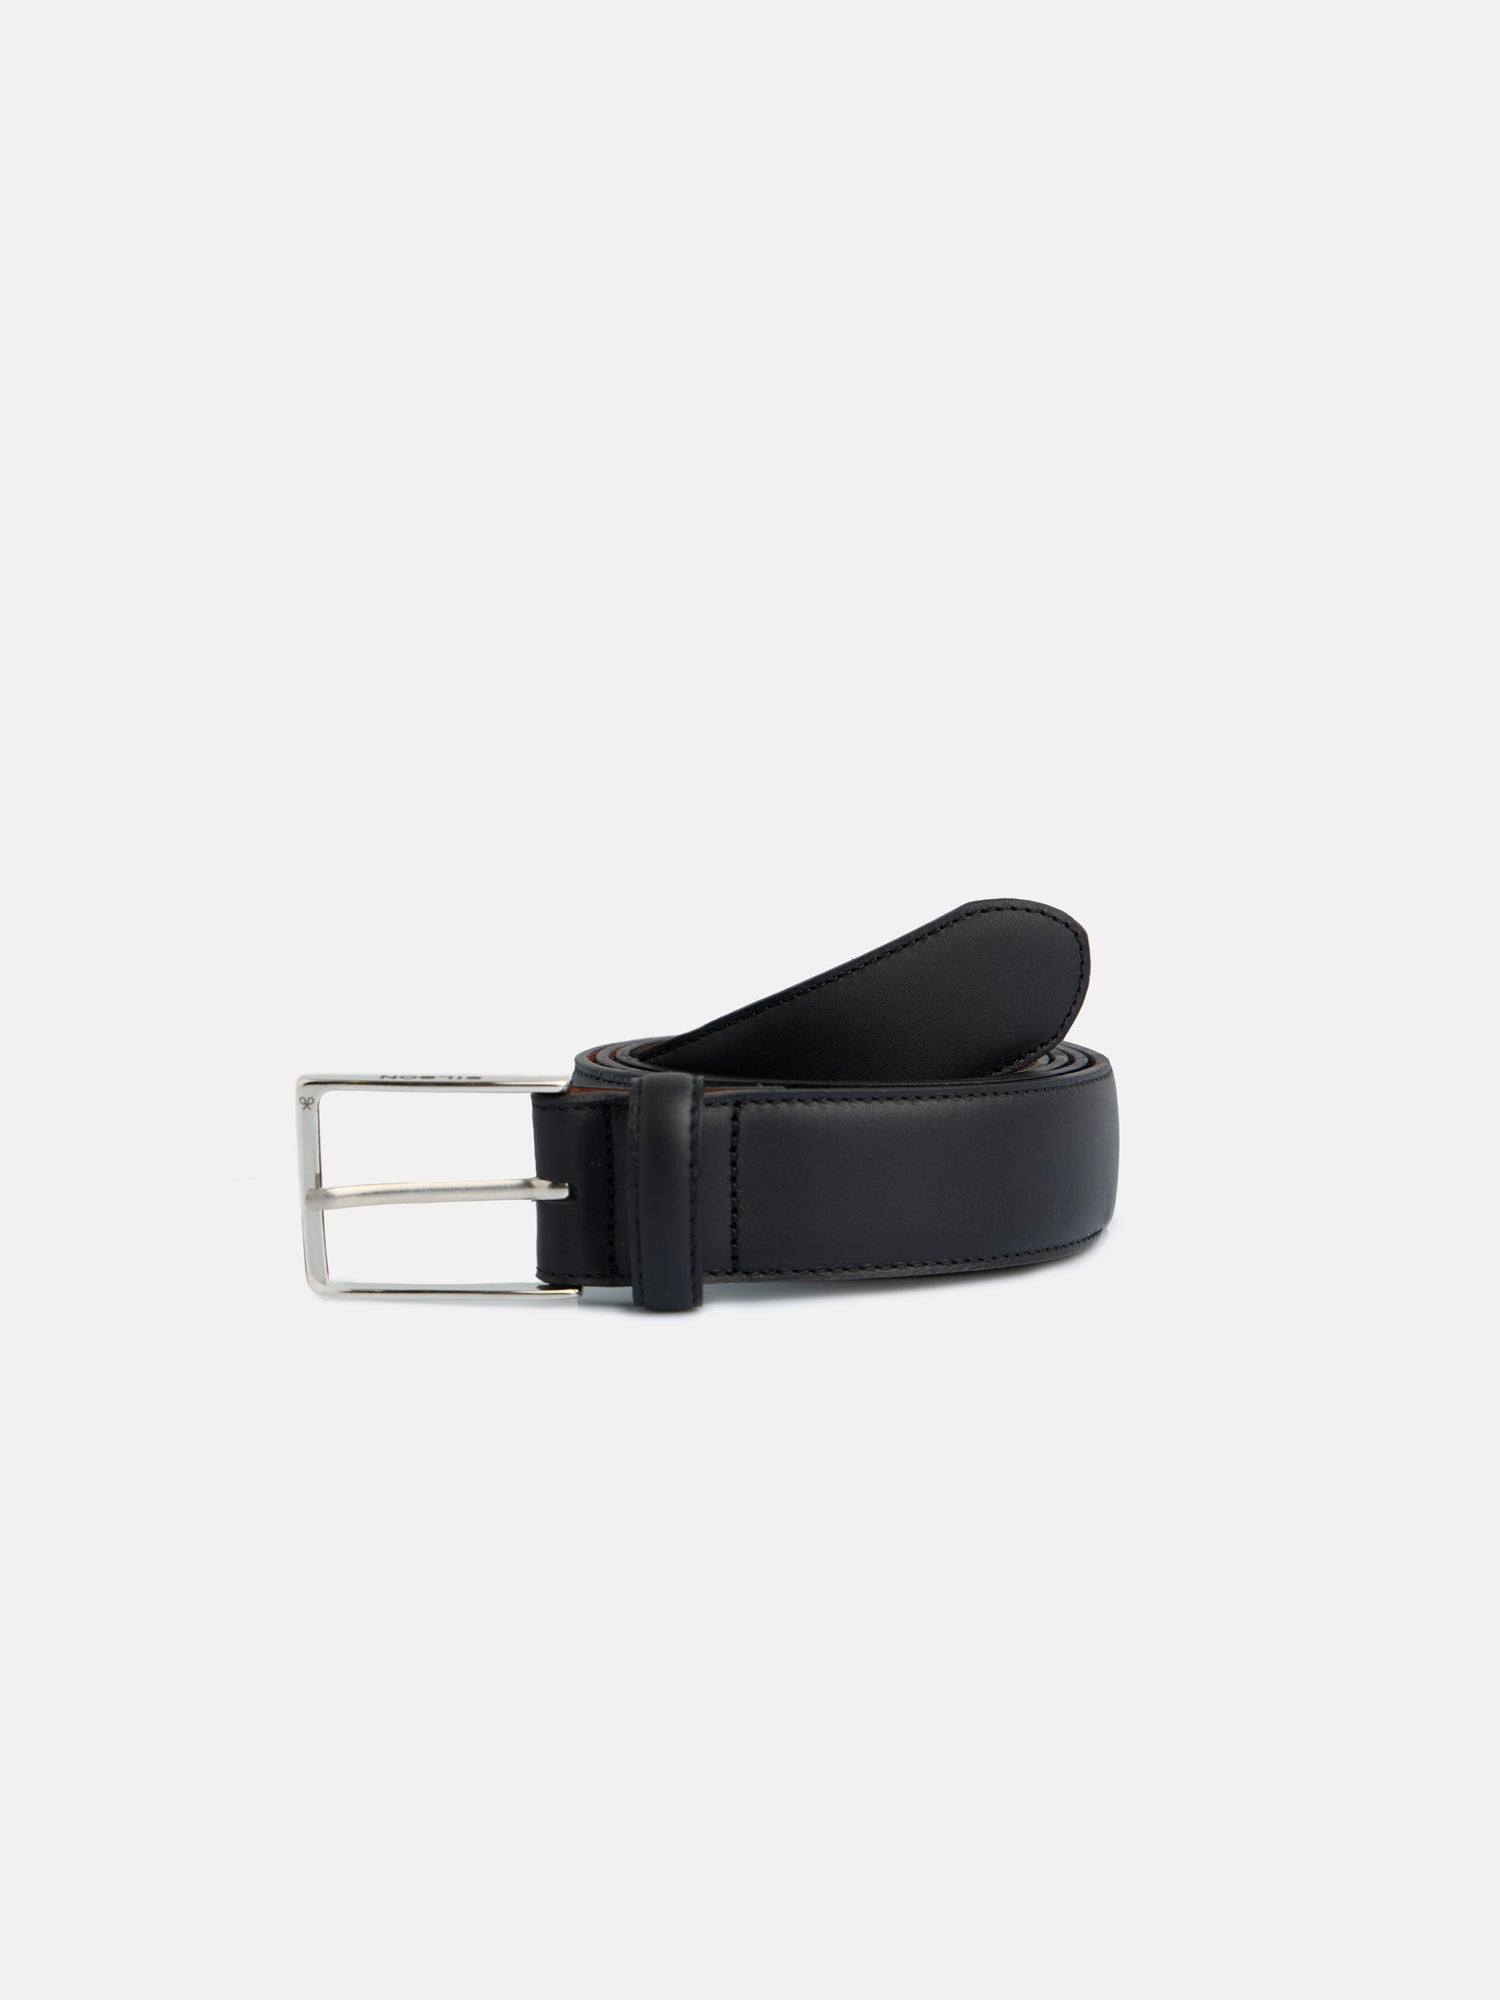 Black leather dress belt